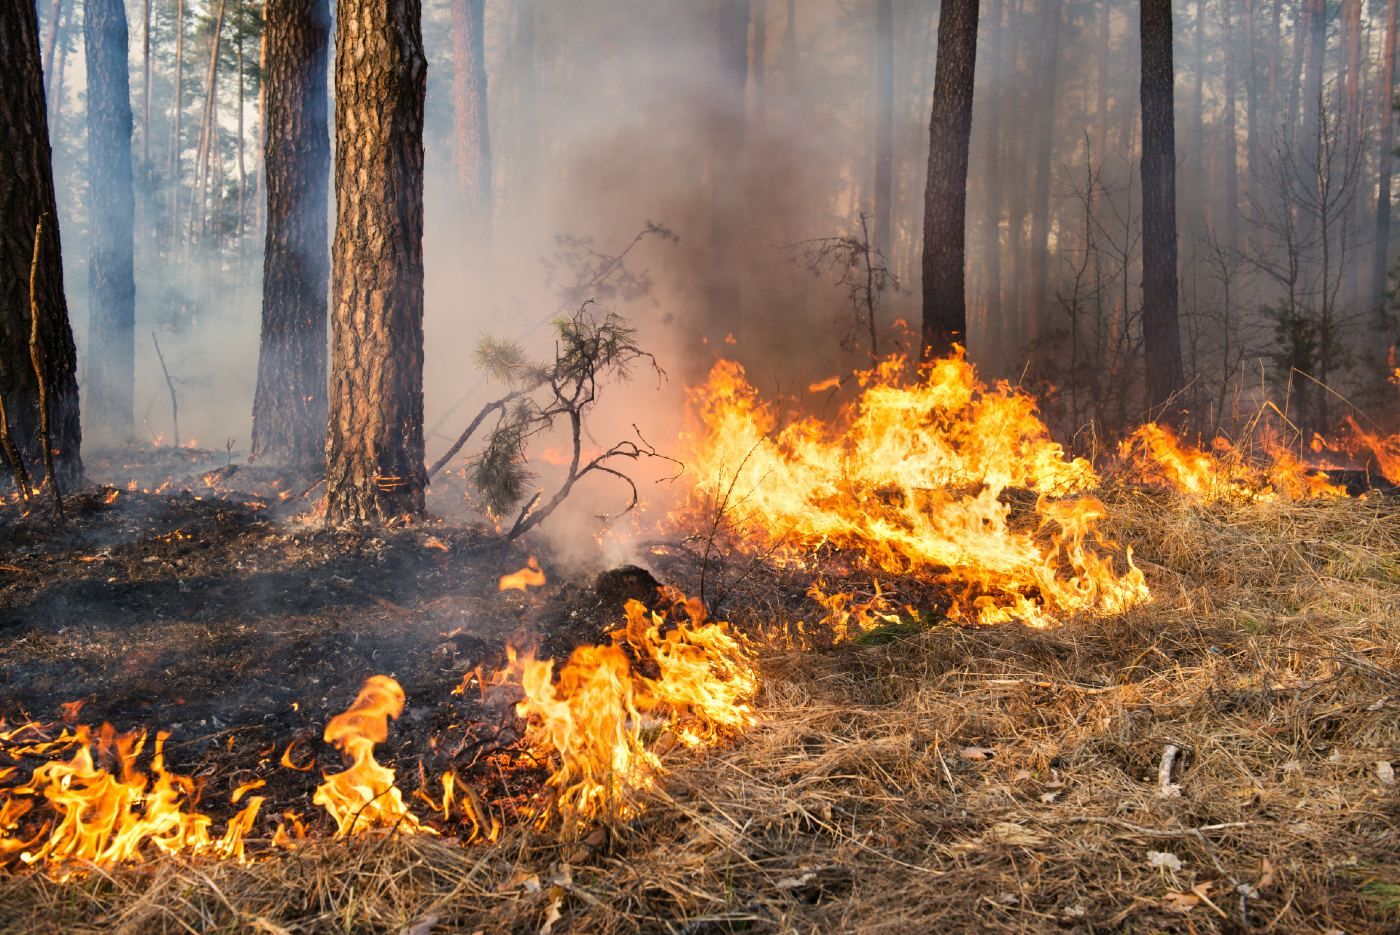 Wildfire on forest floor - Portuguese children